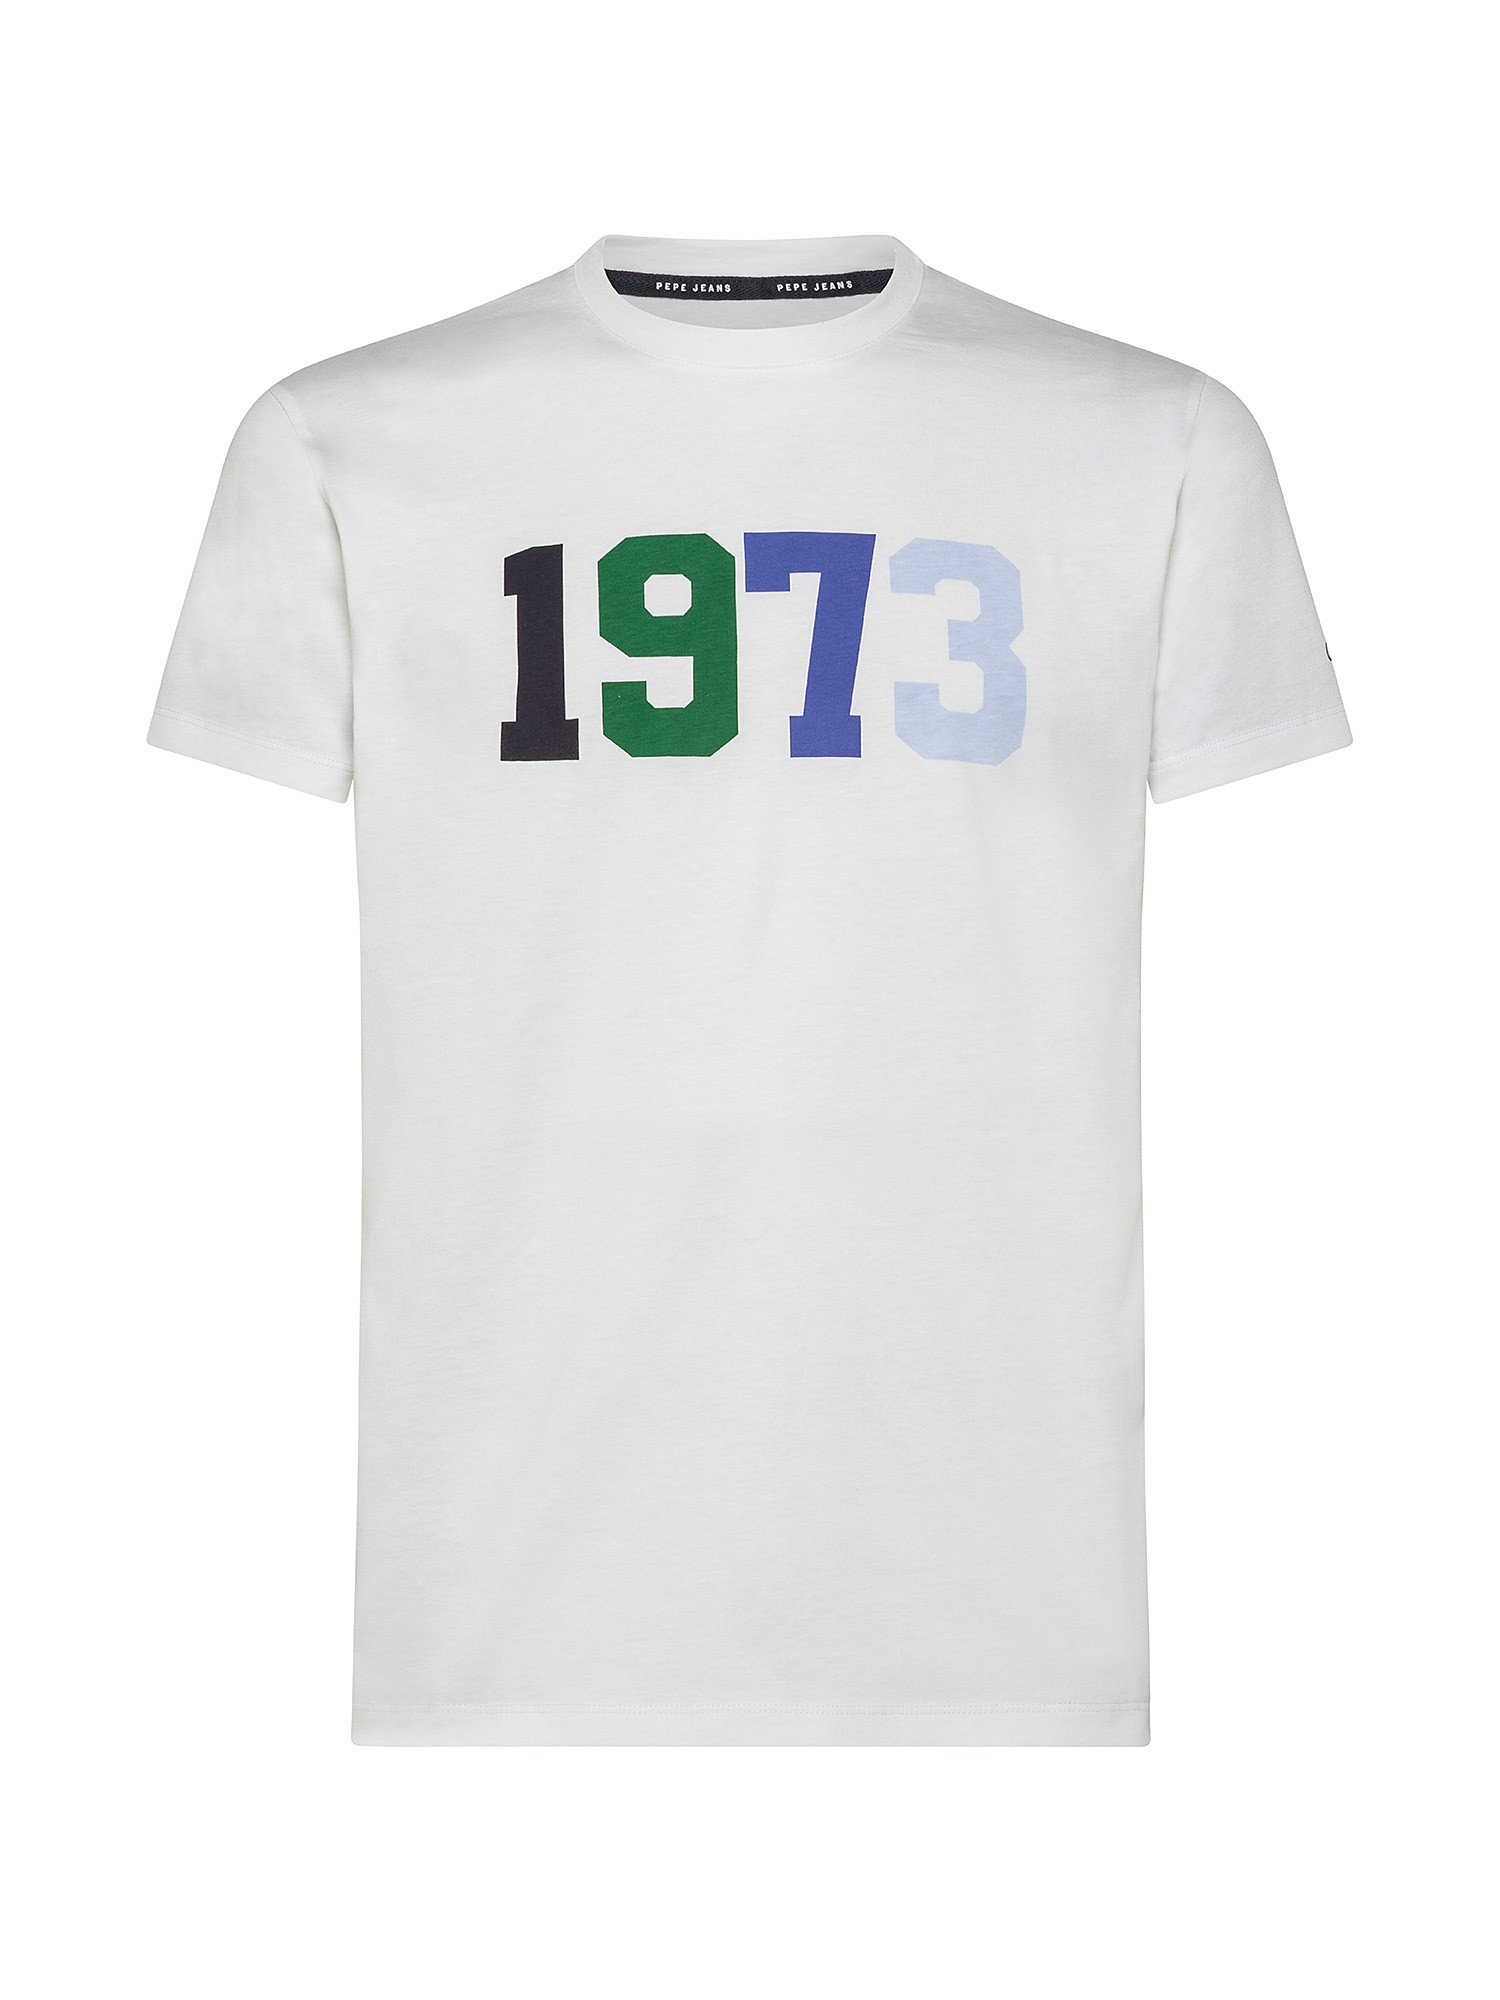 Totem cotton T-shirt, White, large image number 0